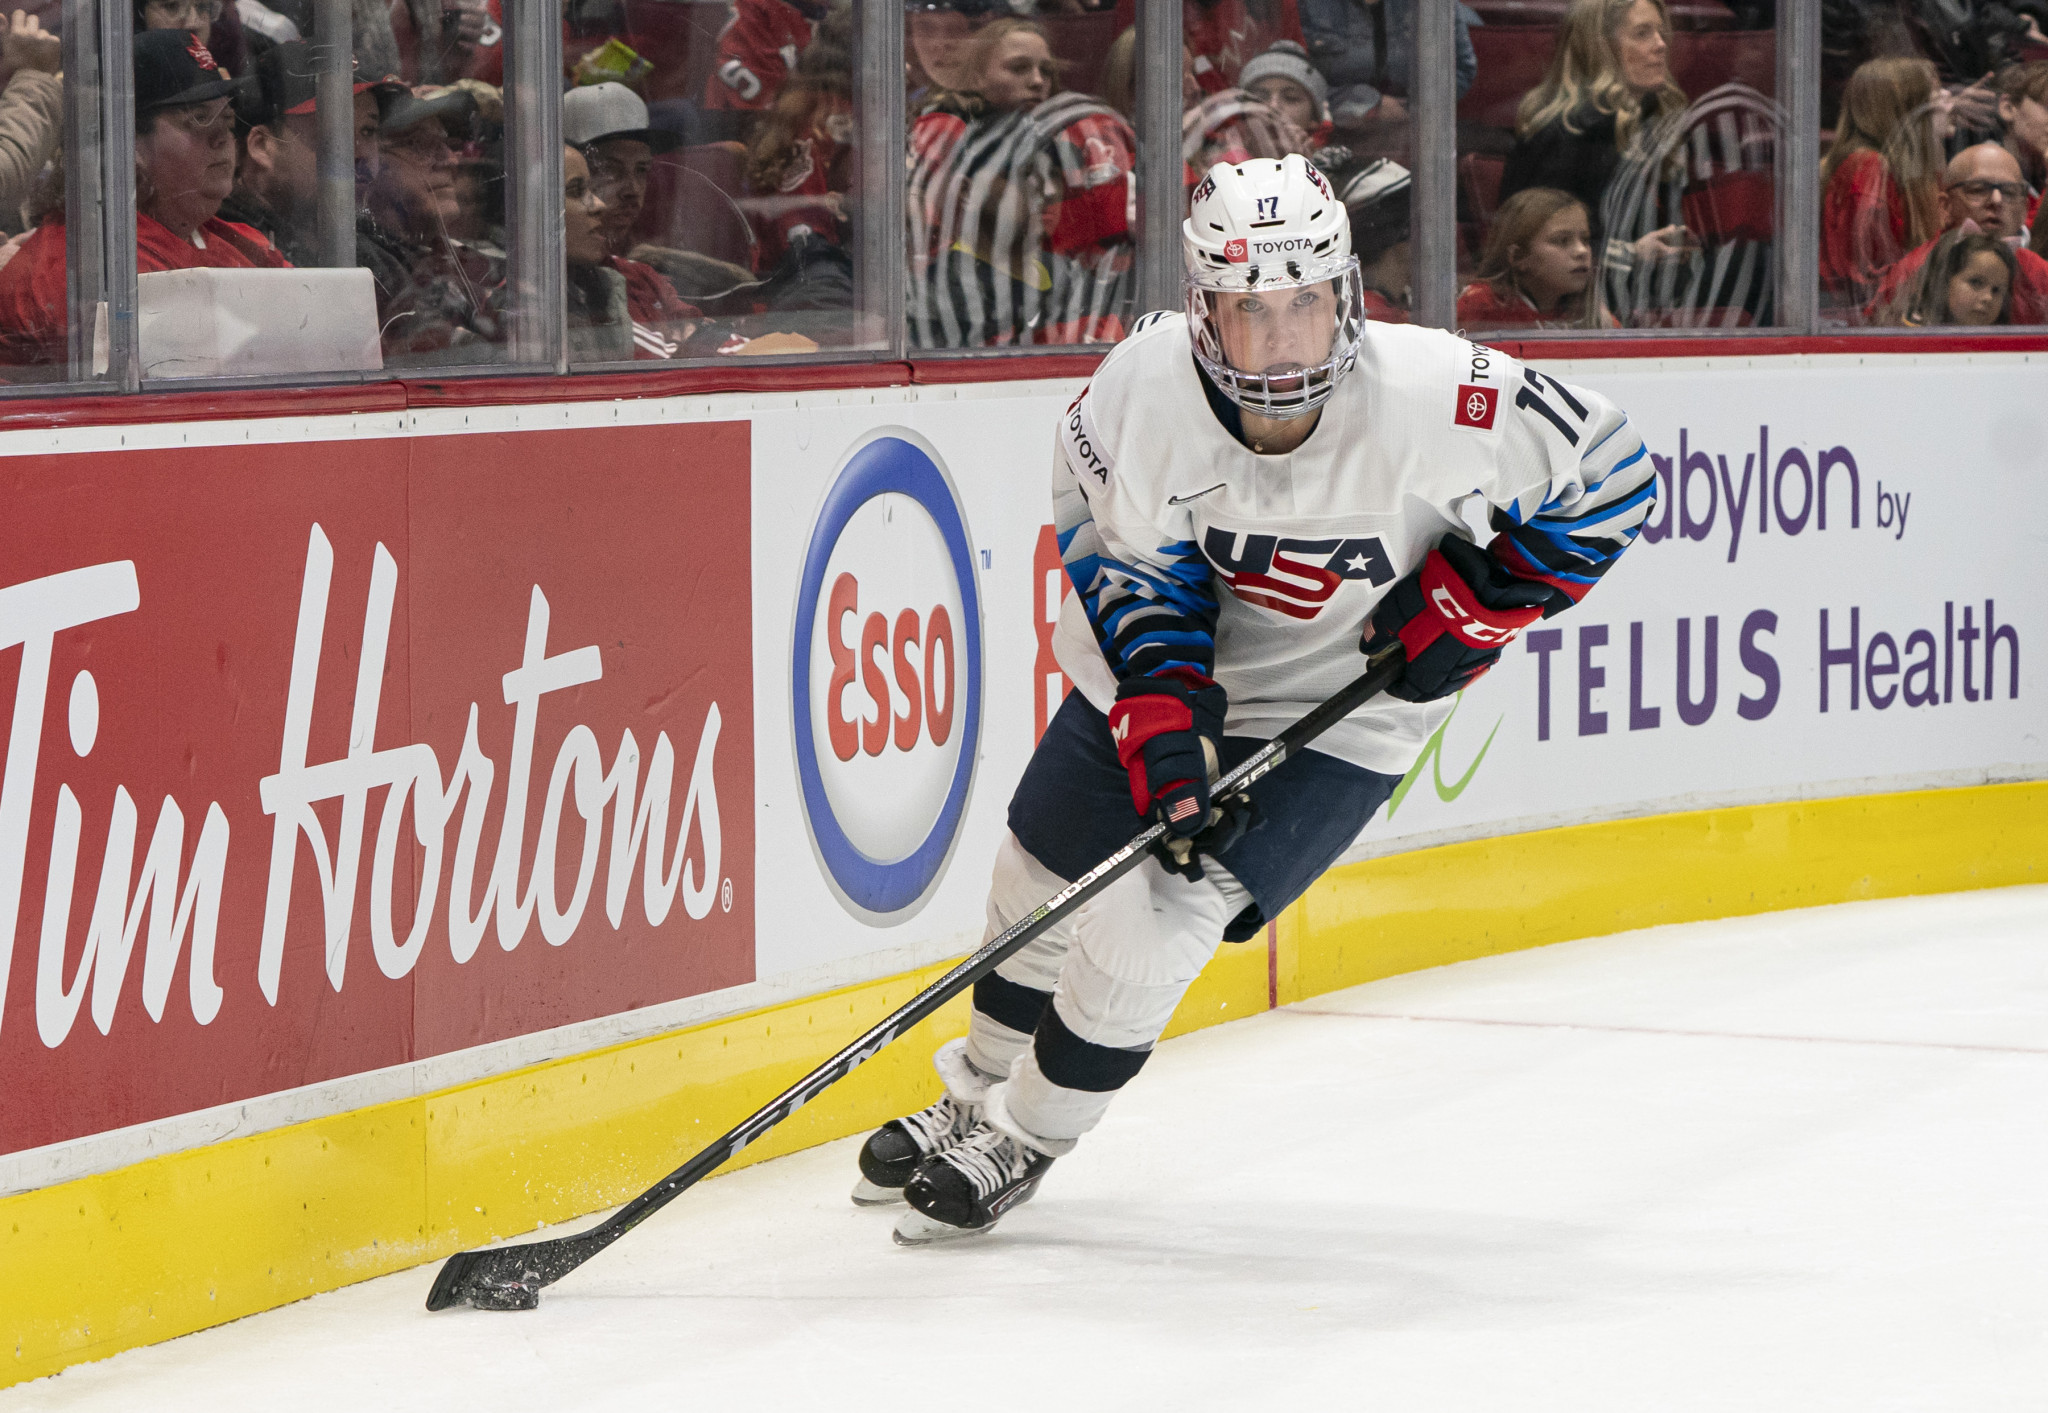 United States beats Canada to top spot in IIHF Women's World Ranking despite World Championship loss